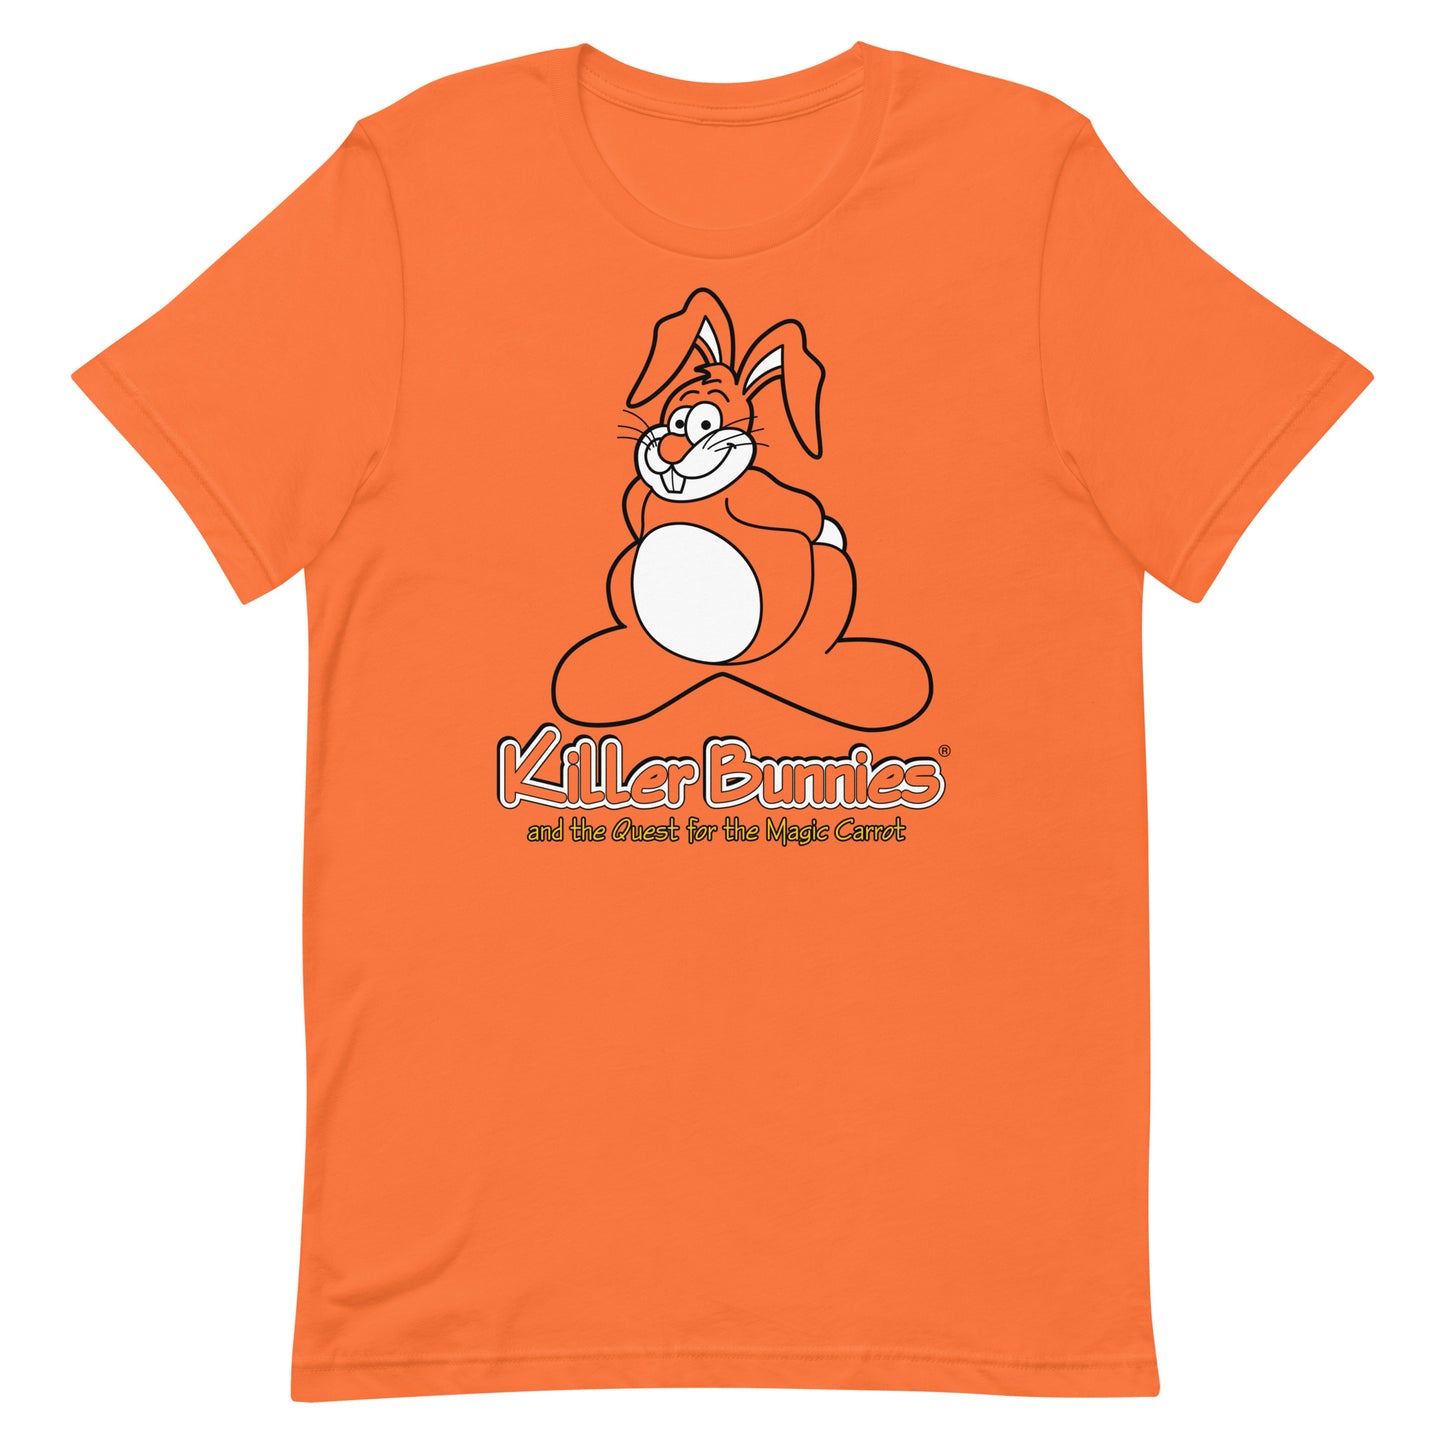 Congenial Bunny Unisex T-Shirt - Orange